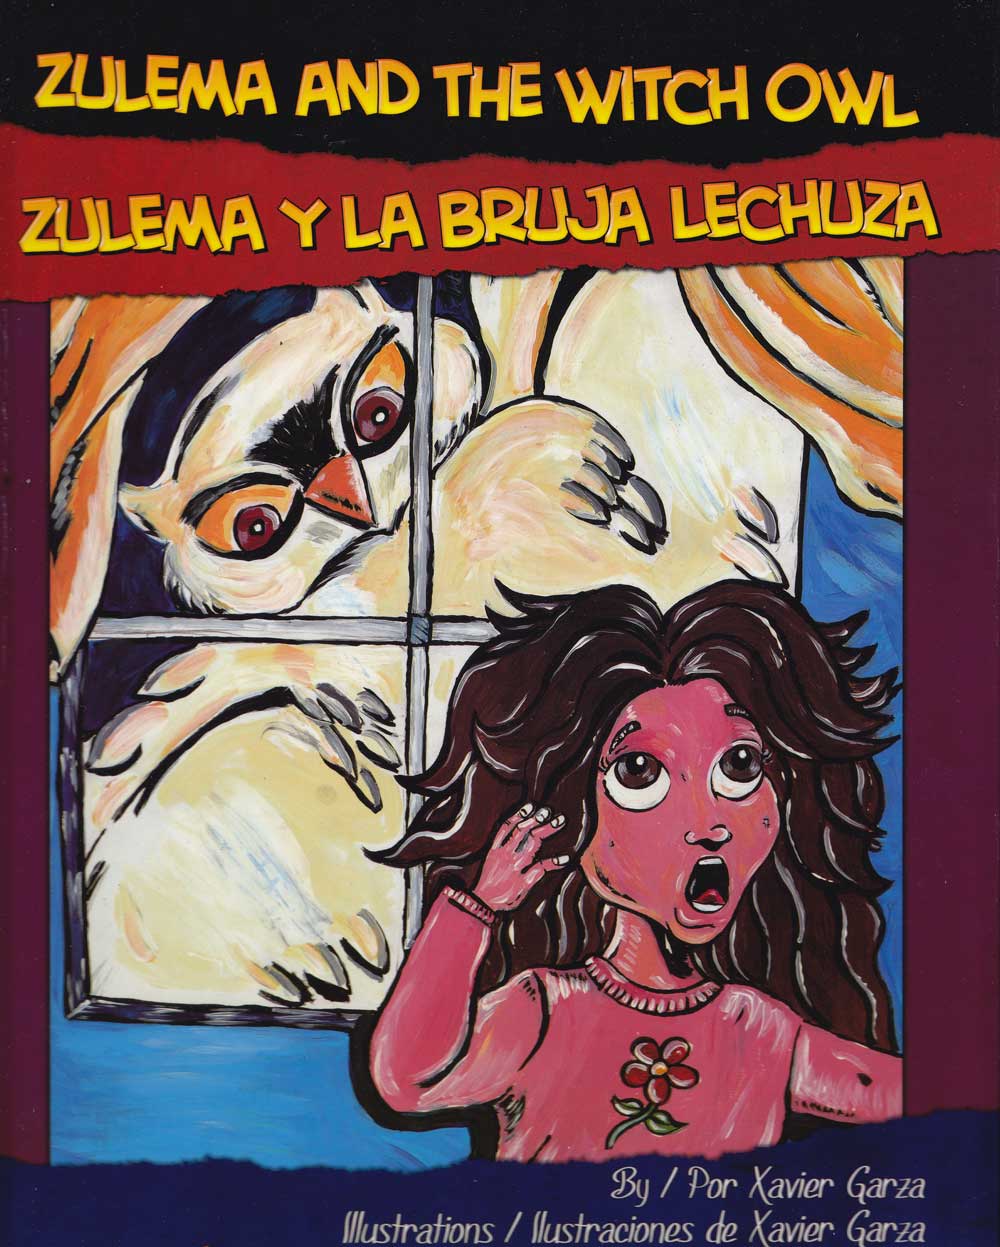 Zulema y la bruja lechuza - Zulema and the Witch Owl, Del Sol Books